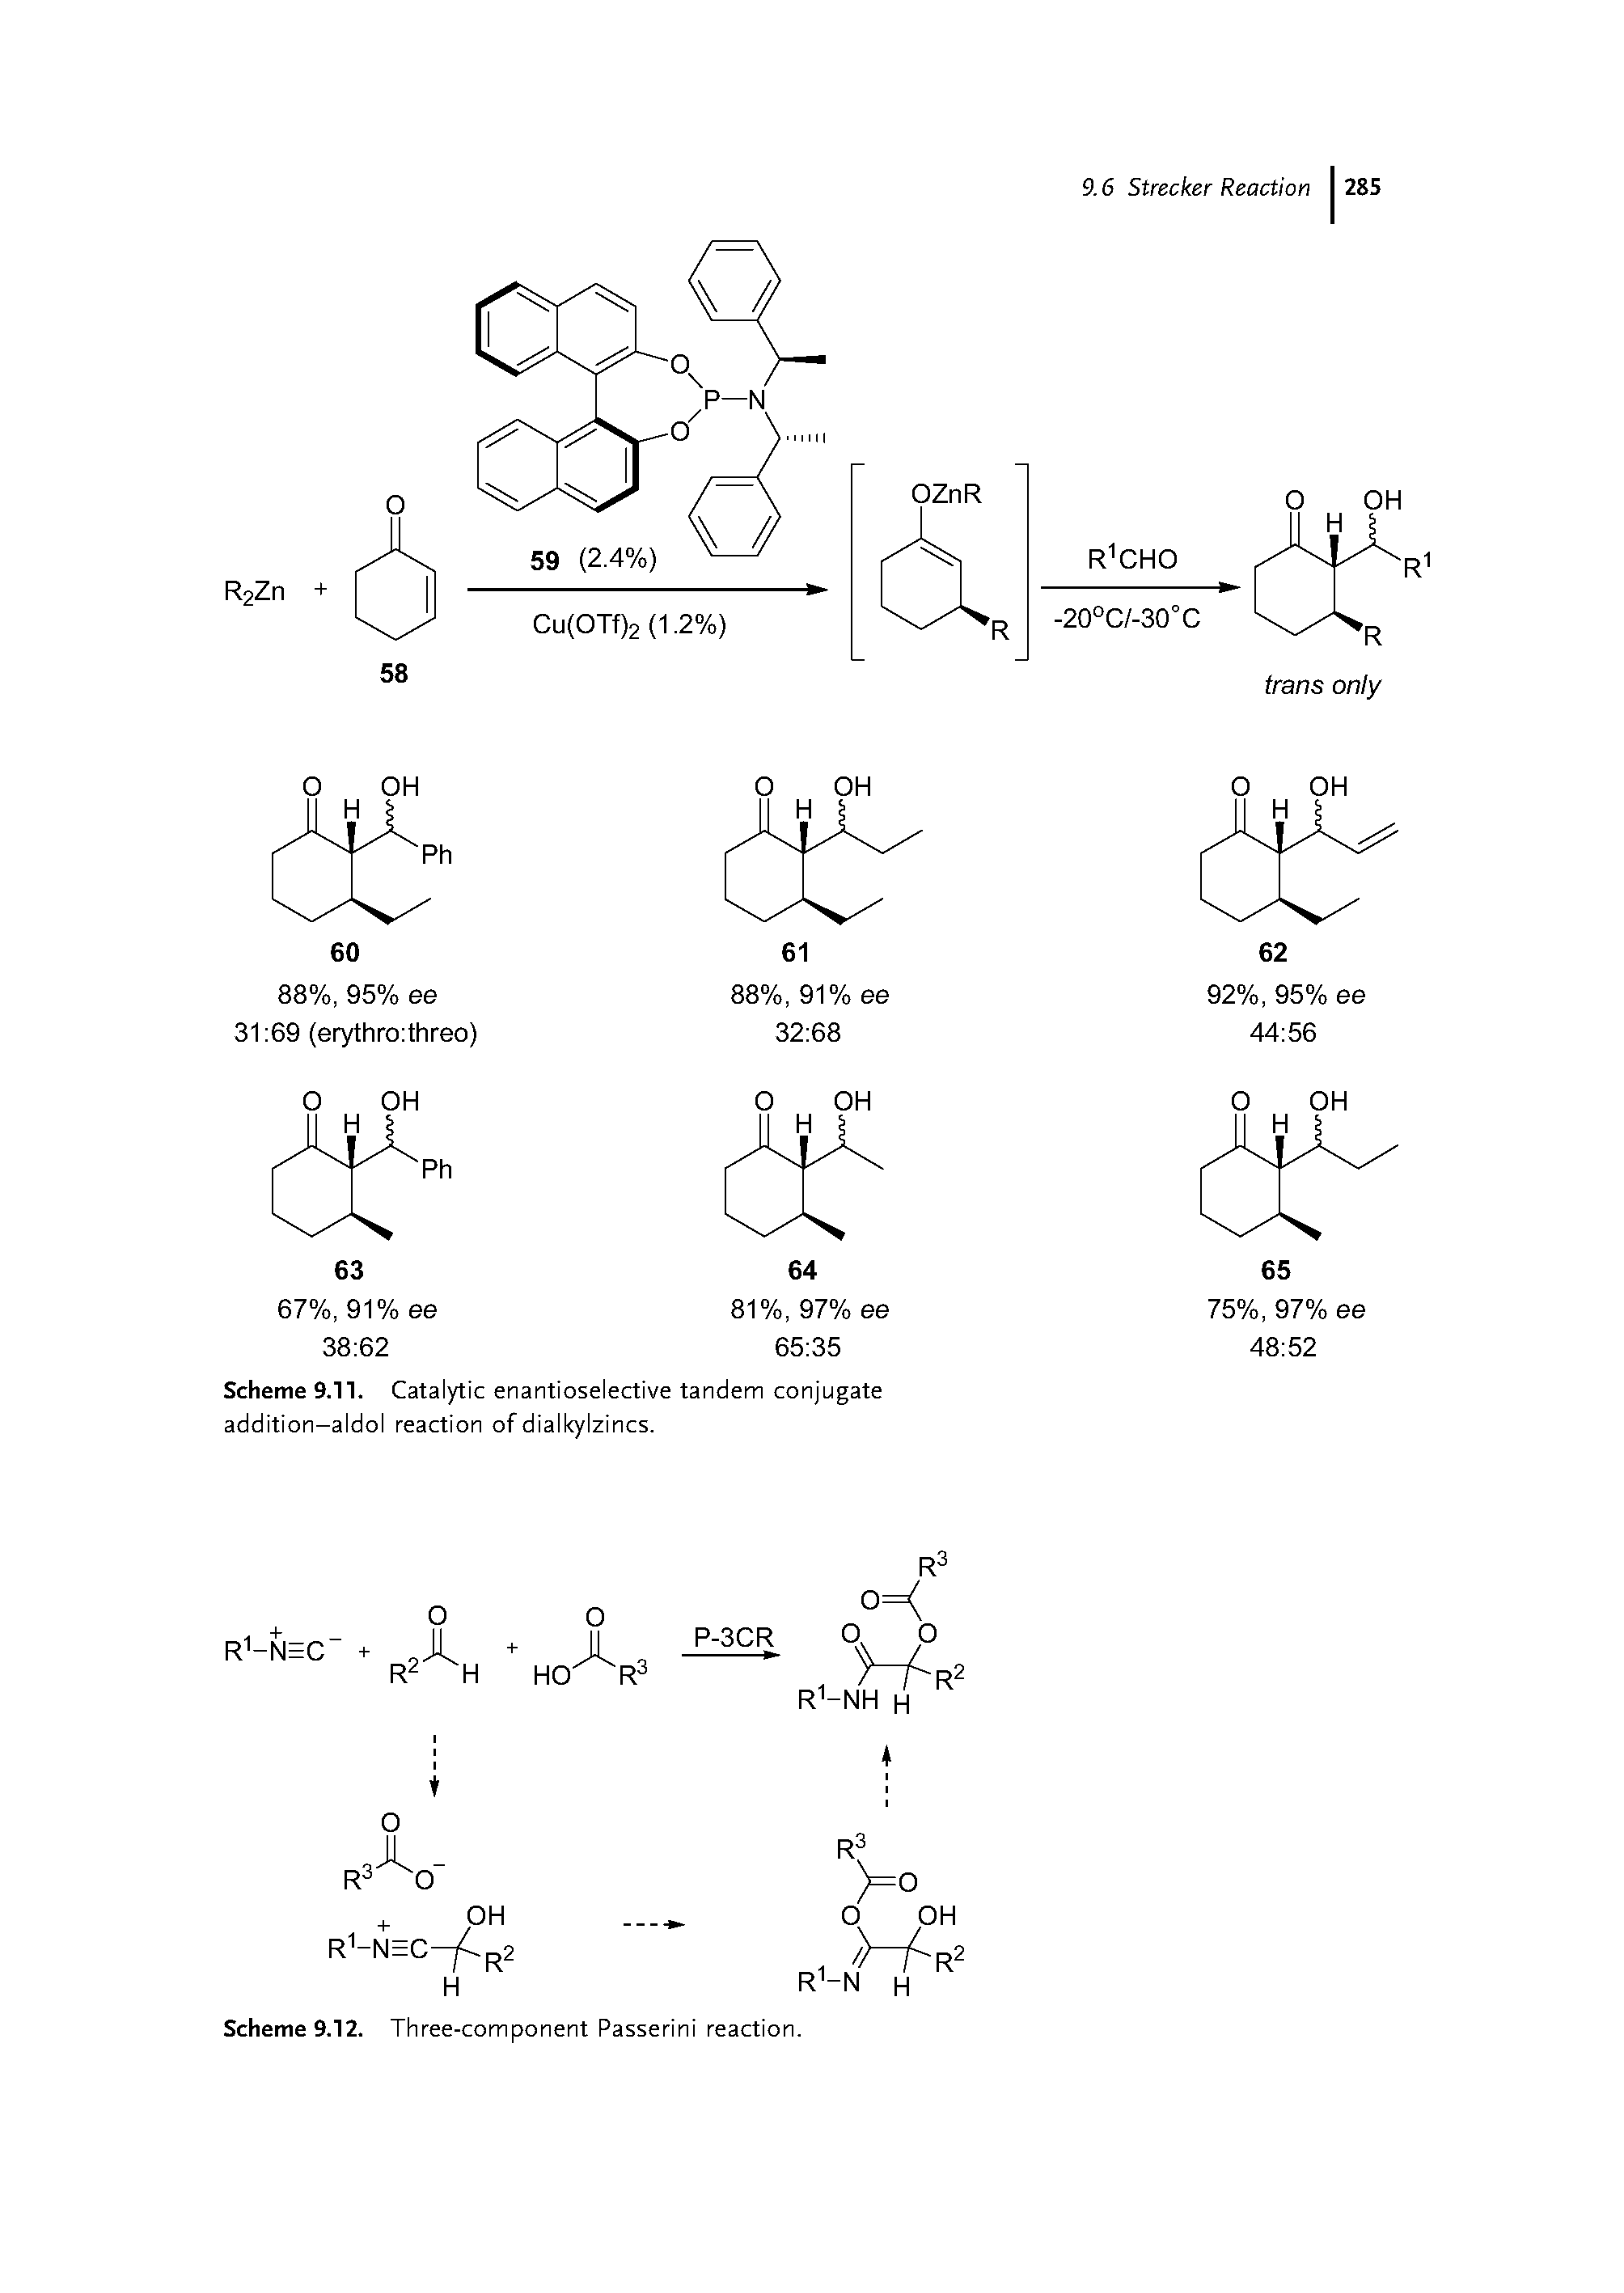 Scheme 9.11. Catalytic enantioselective tandem conjugate addition-aldol reaction of dialkylzincs.